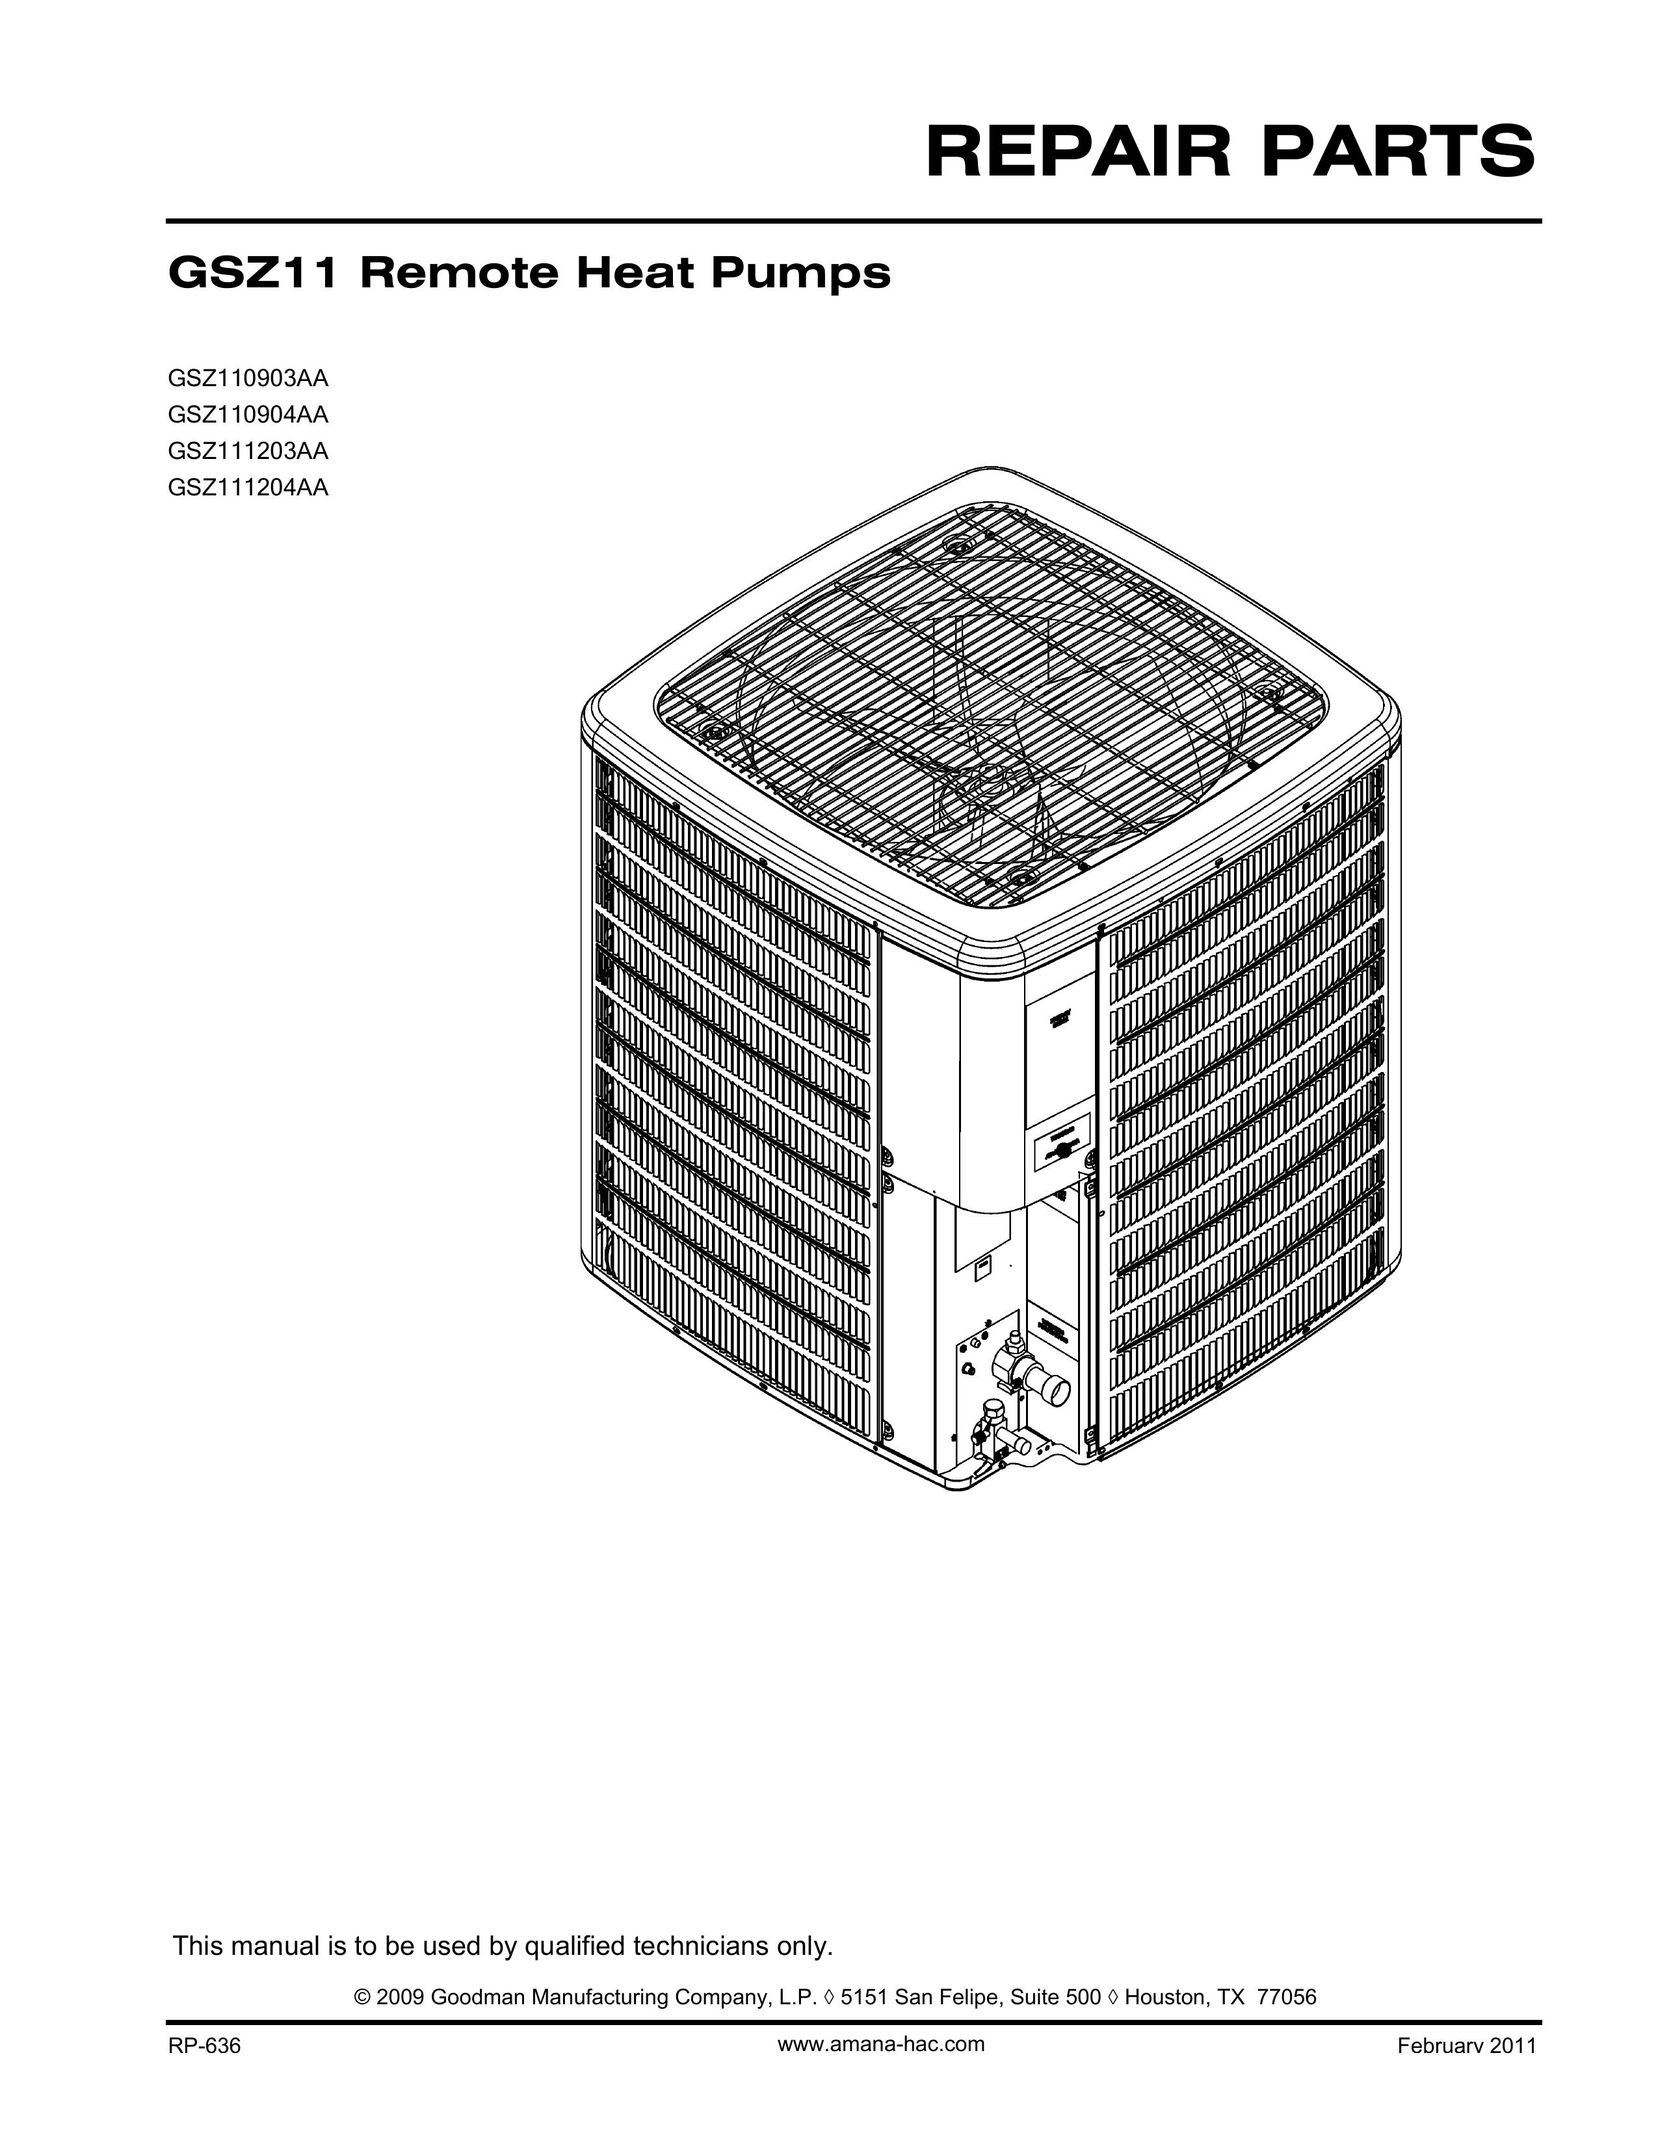 Goodman Mfg GSZ11904AA Heat Pump User Manual